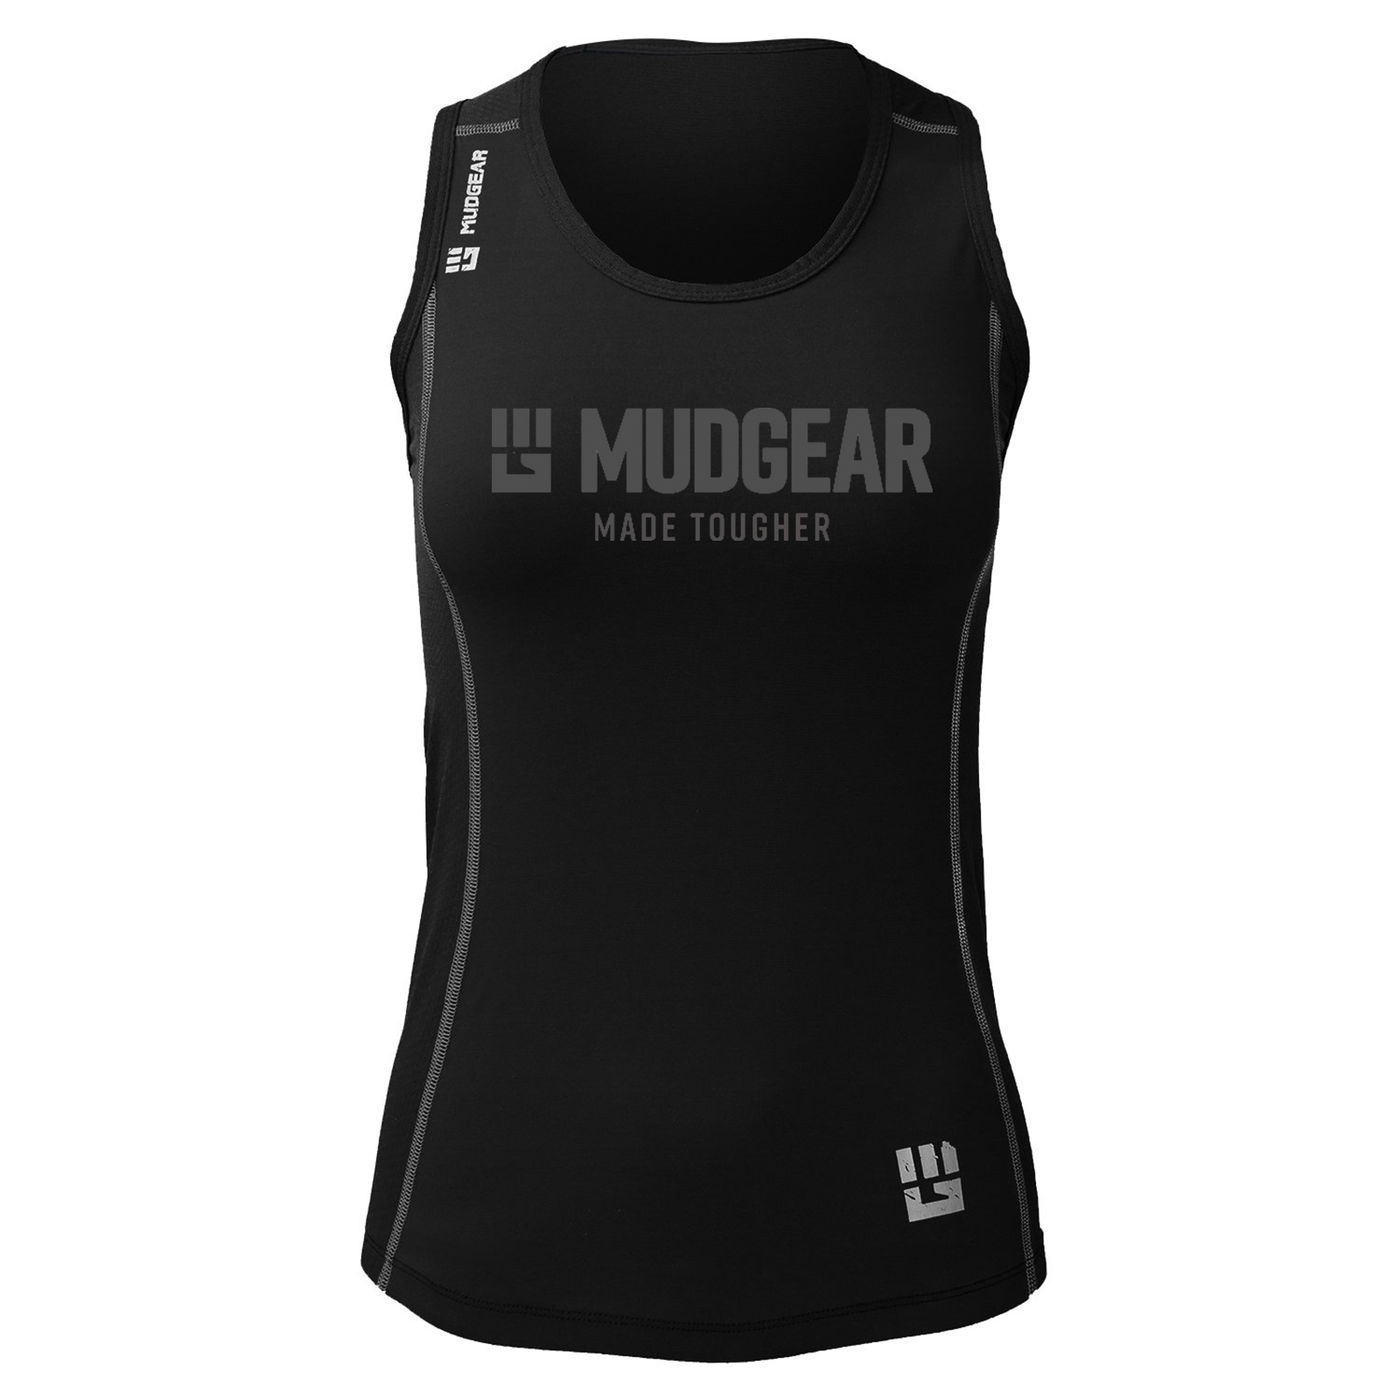 MudGear Made Tougher - Women's Performance Racerback Tank (Black)